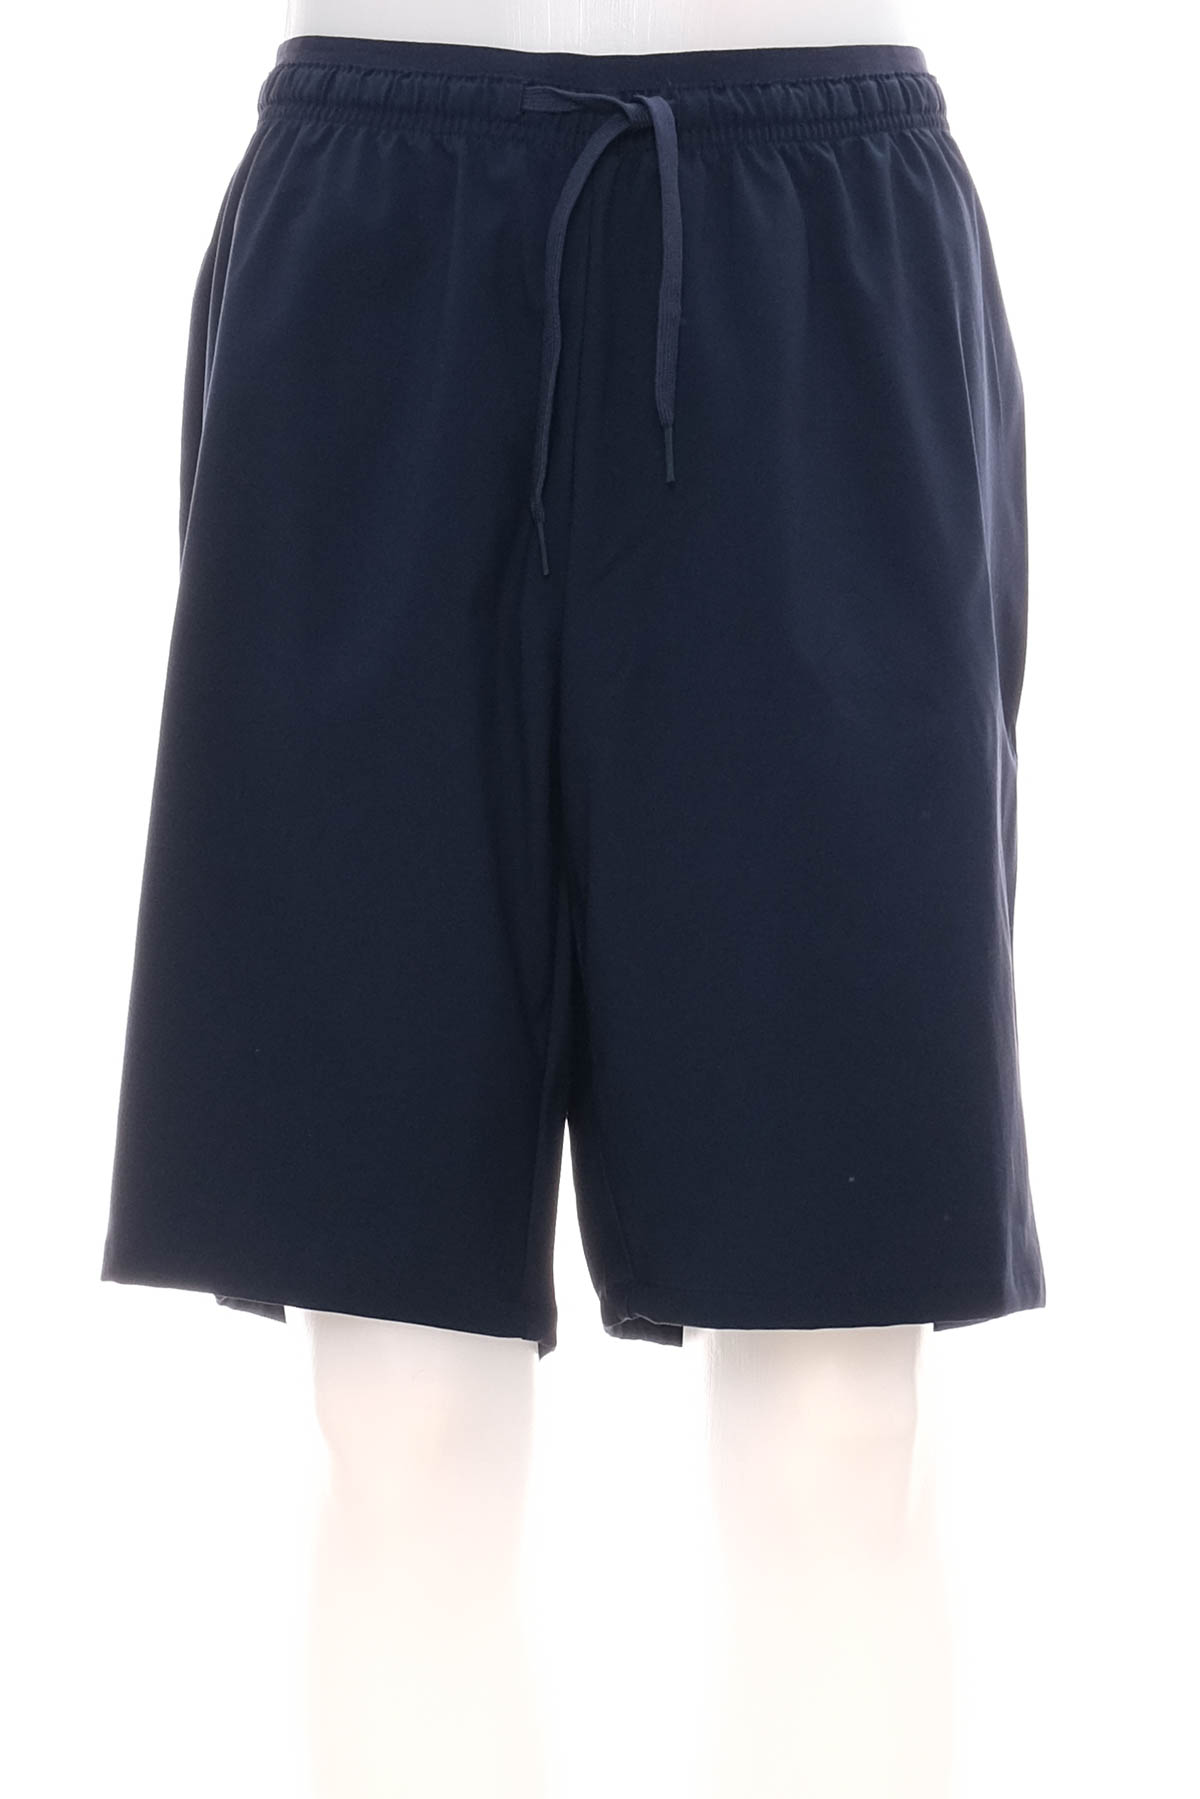 Men's shorts - DECATHLON - 0